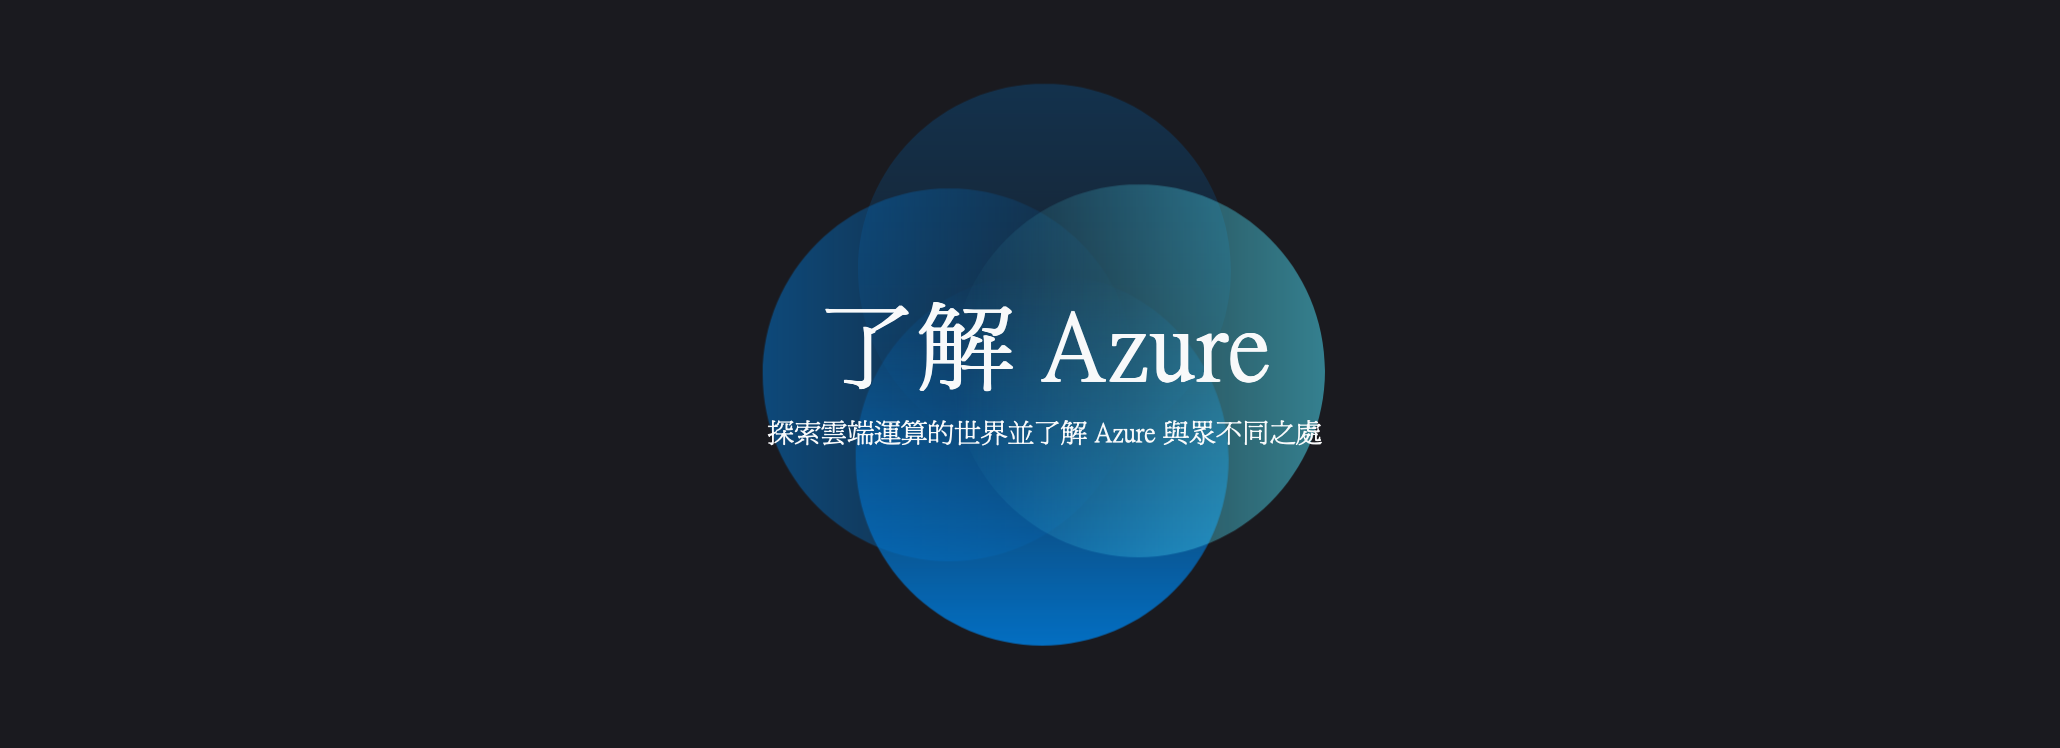 Azure_banner